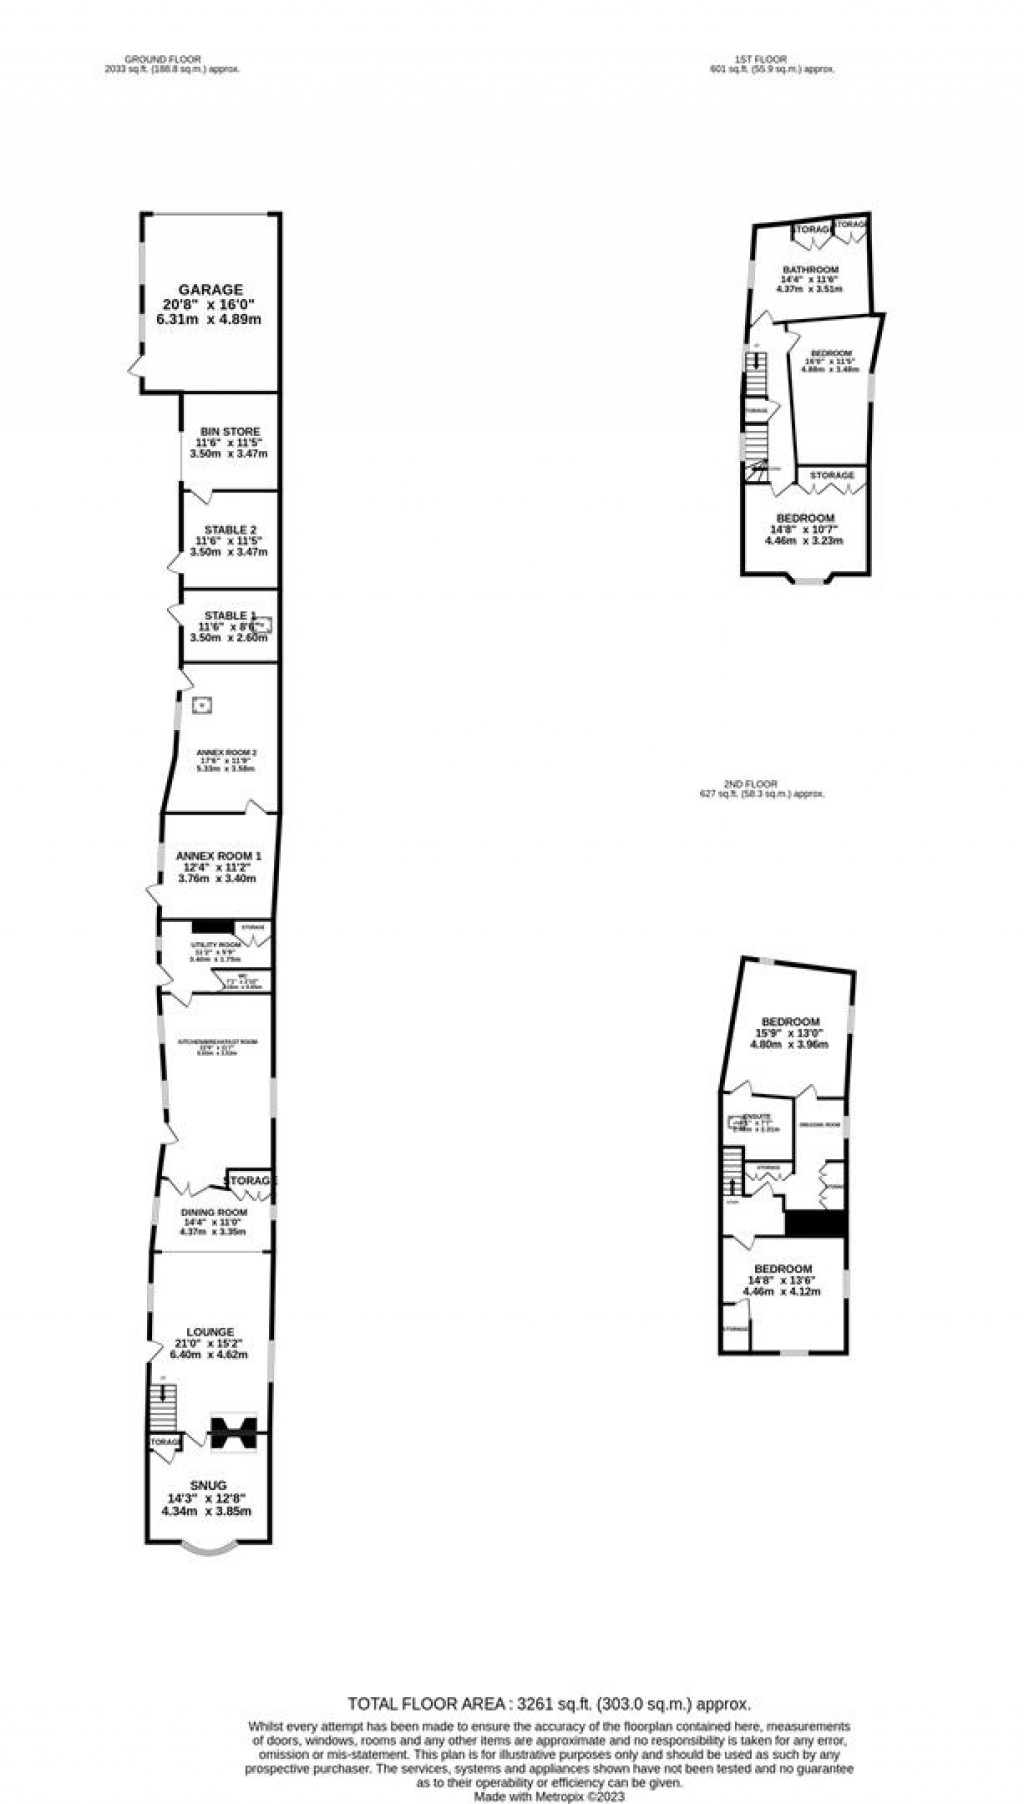 Floorplans For High Street, Gretton, Corby